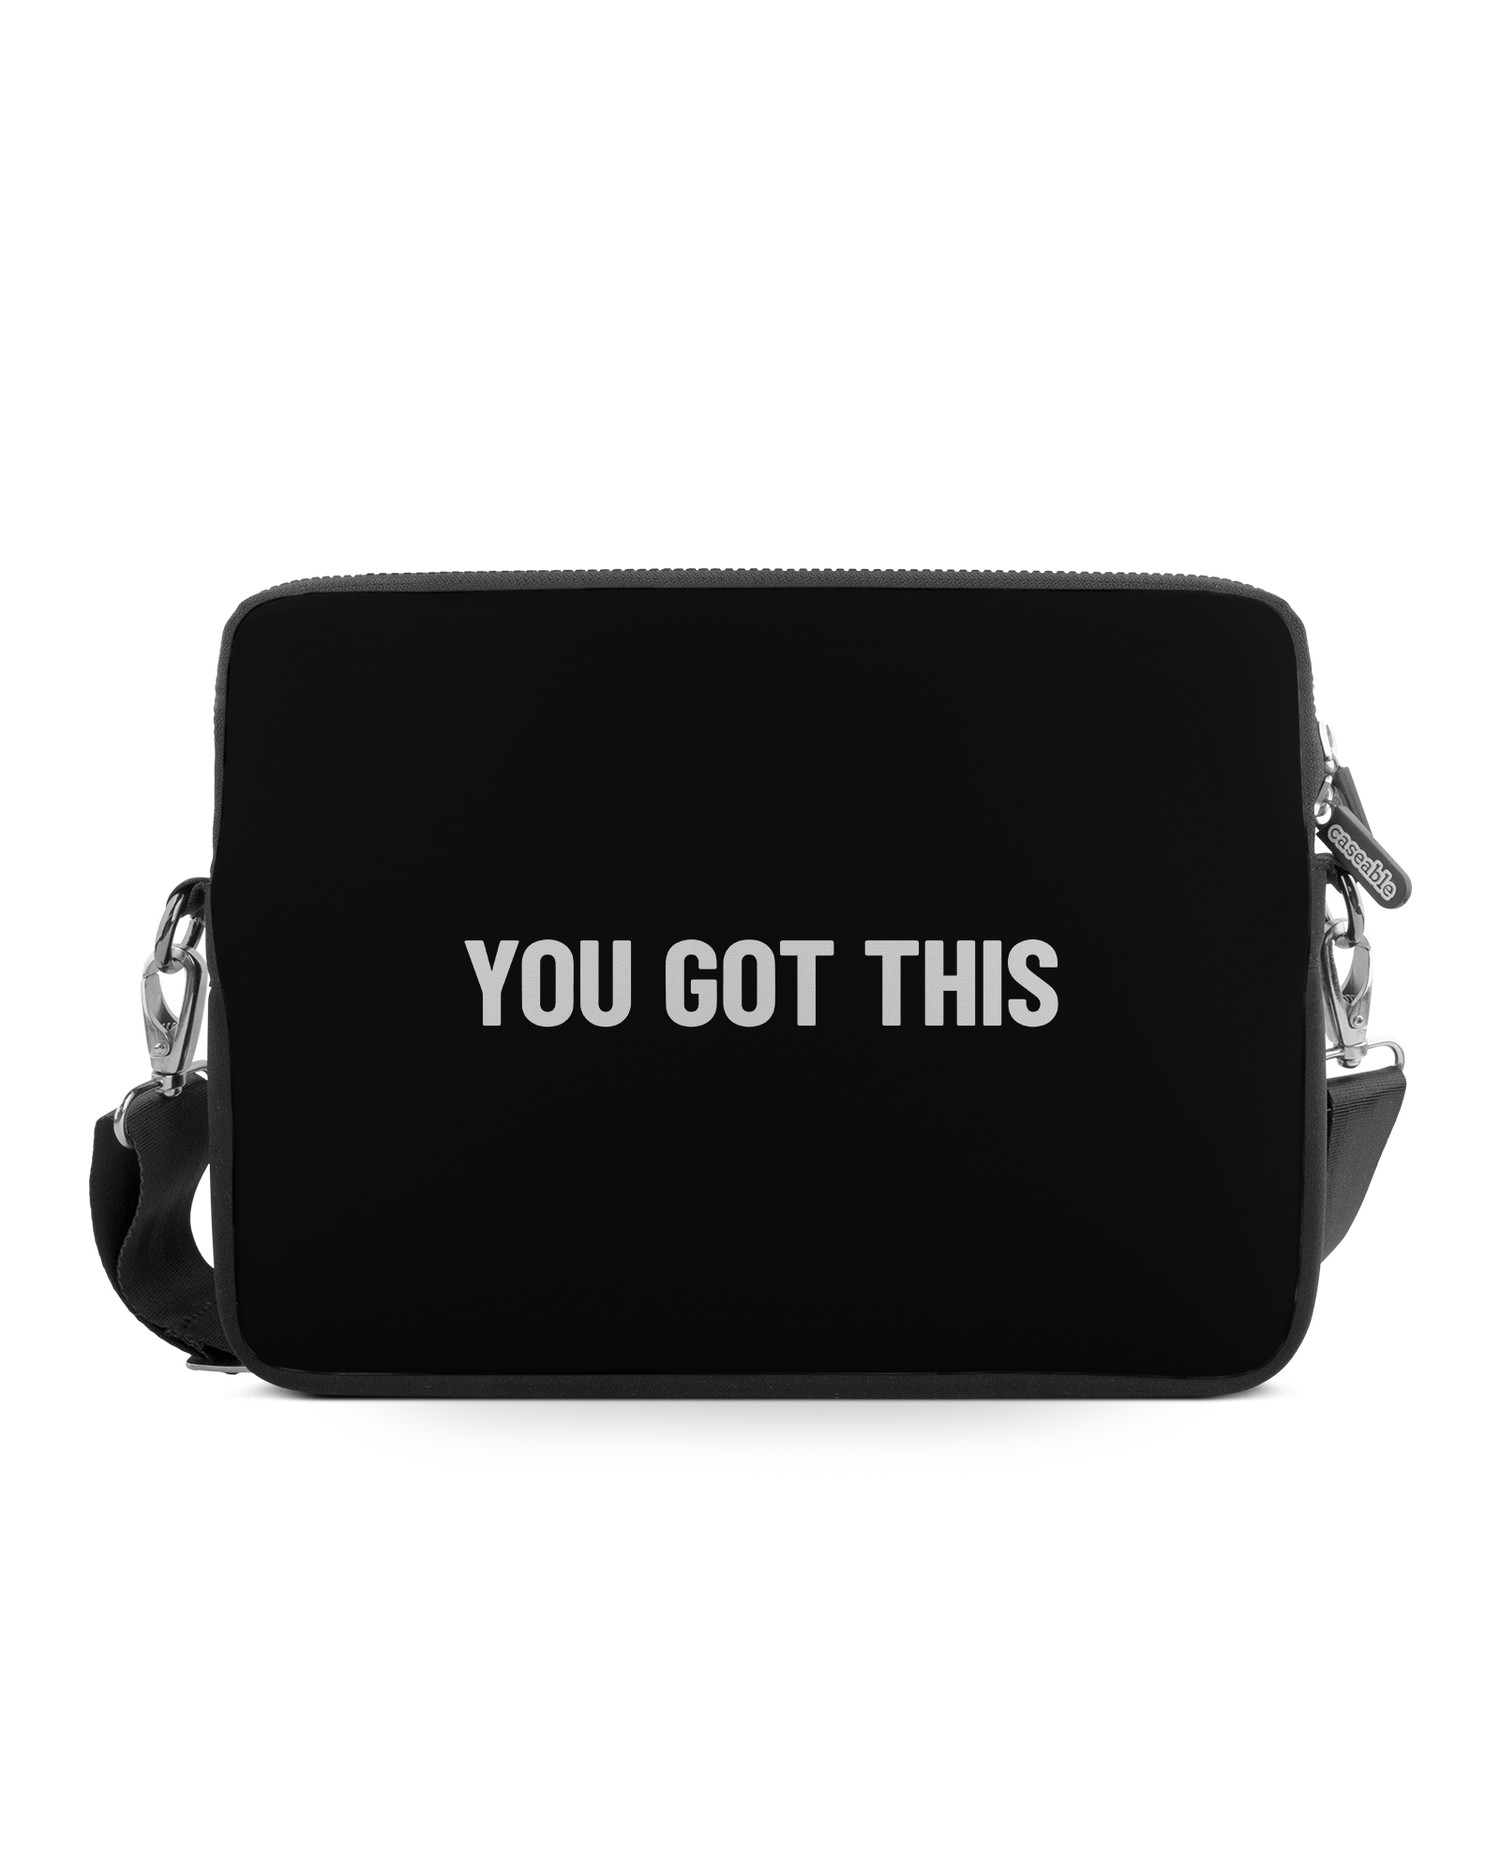 You Got This Black Premium Laptop Bag 17 inch: Front View